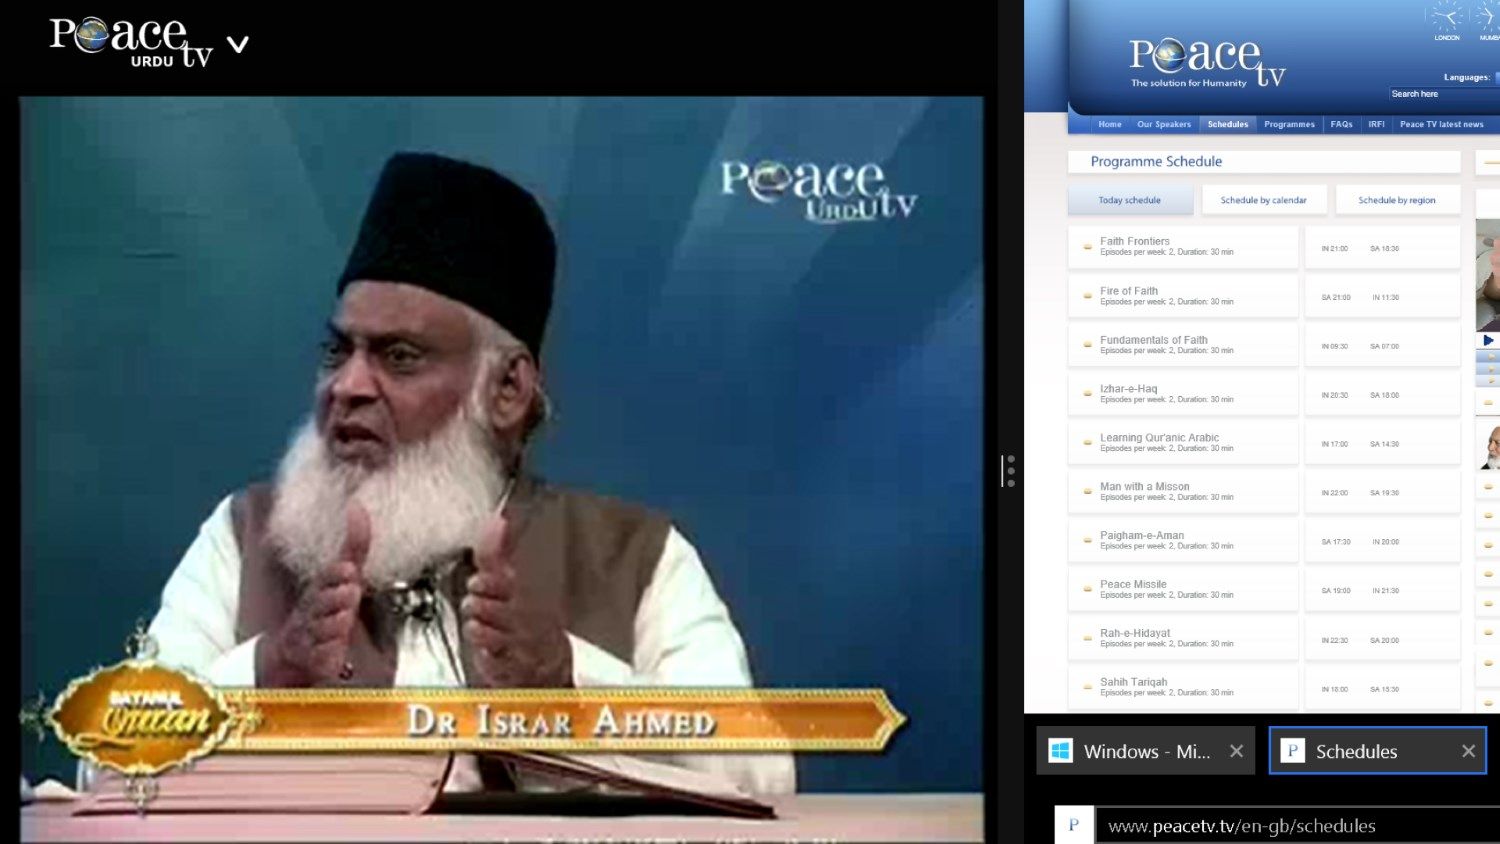 Peace TV Live - Urdu - Dr. Israr Ahmed